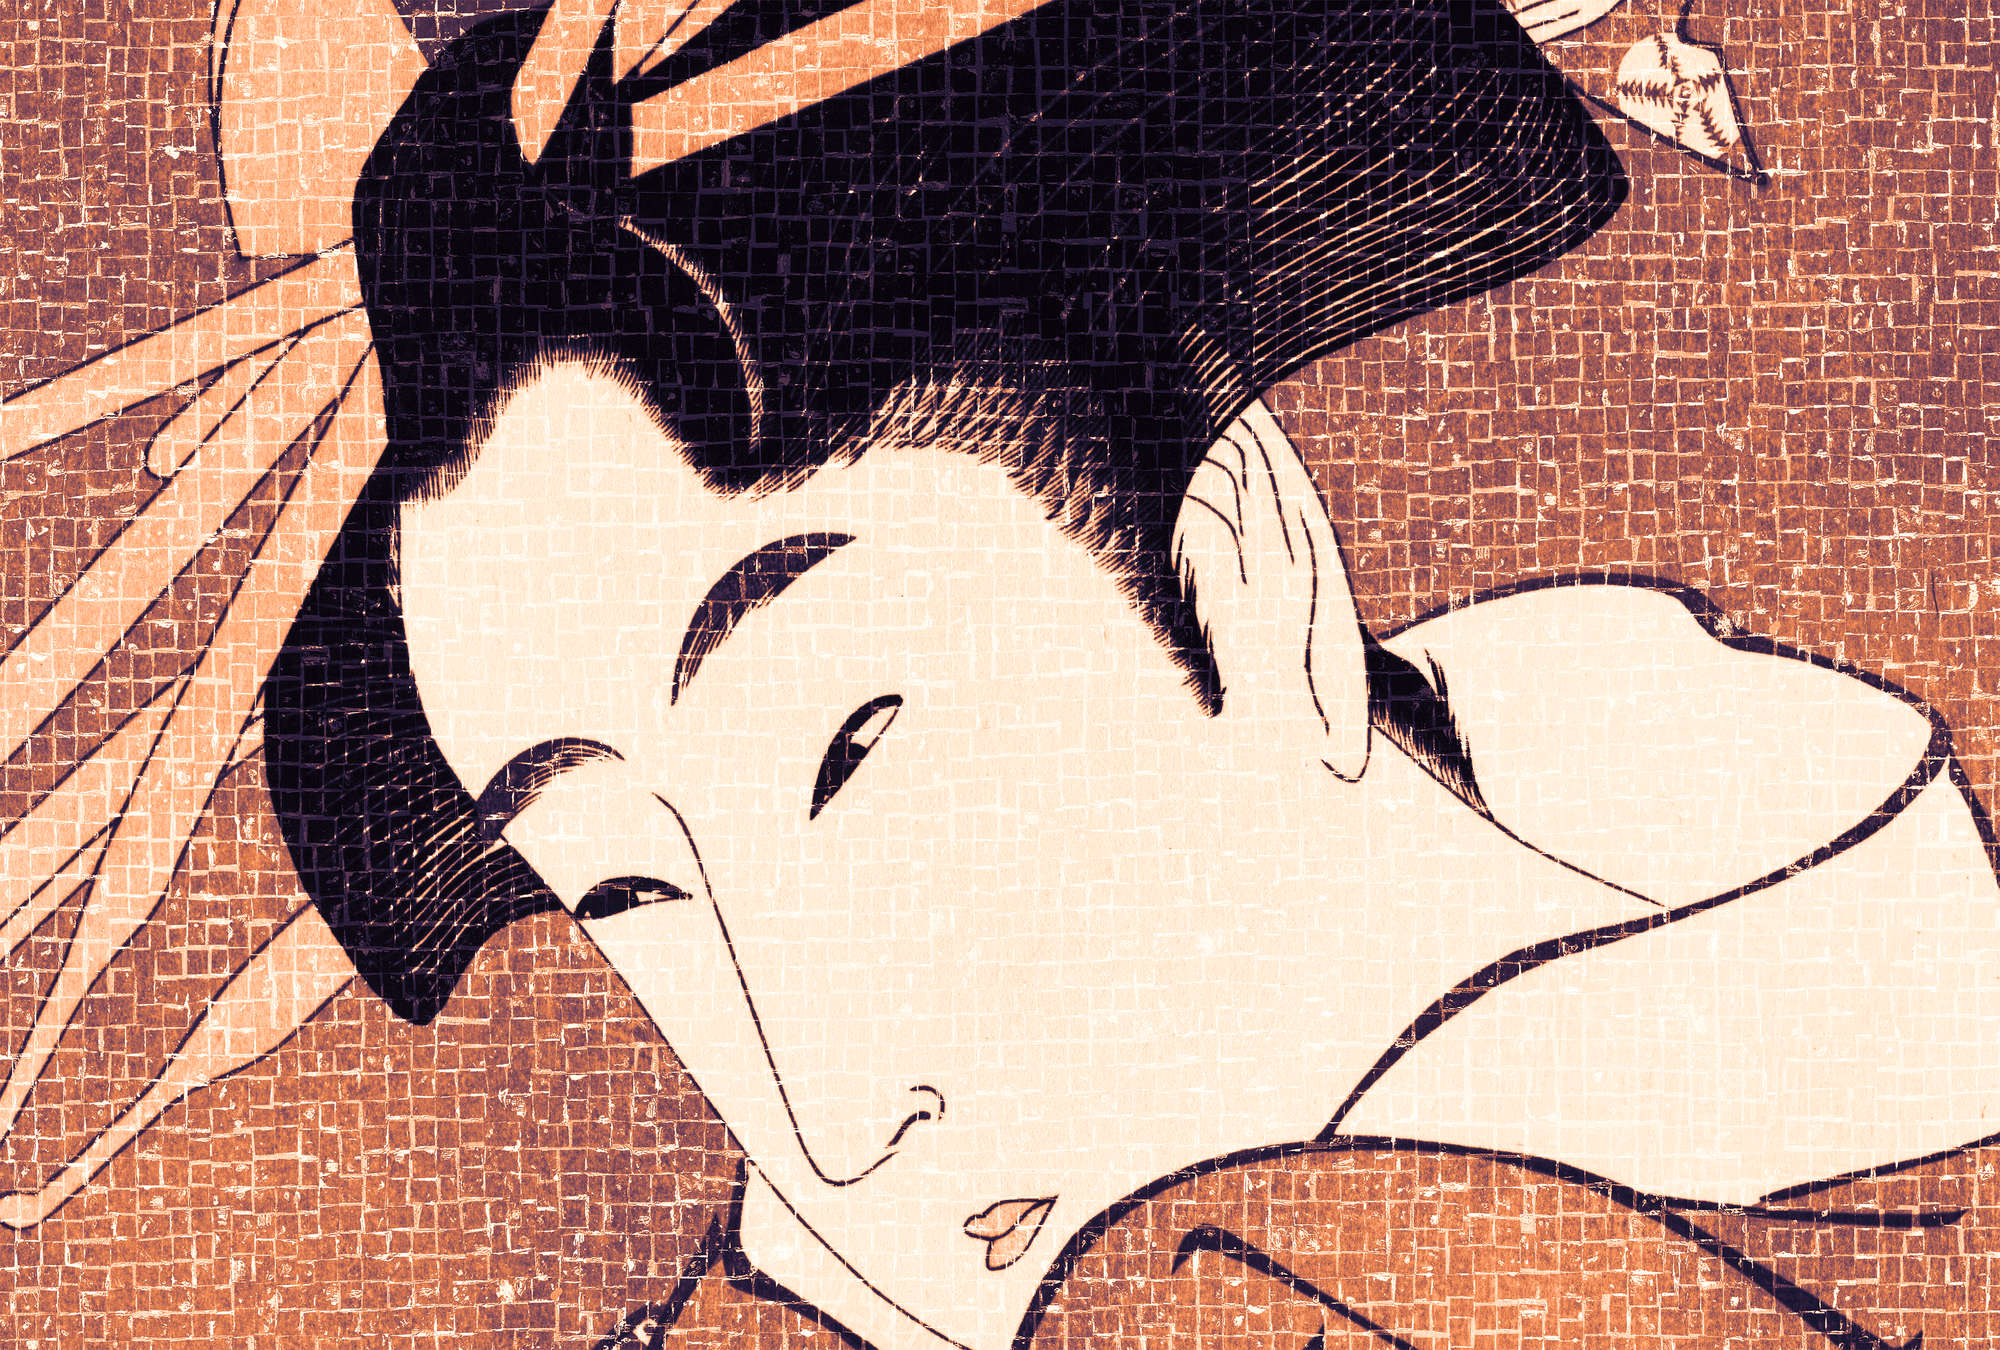             Muurschildering Samurai, Azië ontwerp in pixel stijl - oranje, crème, zwart
        